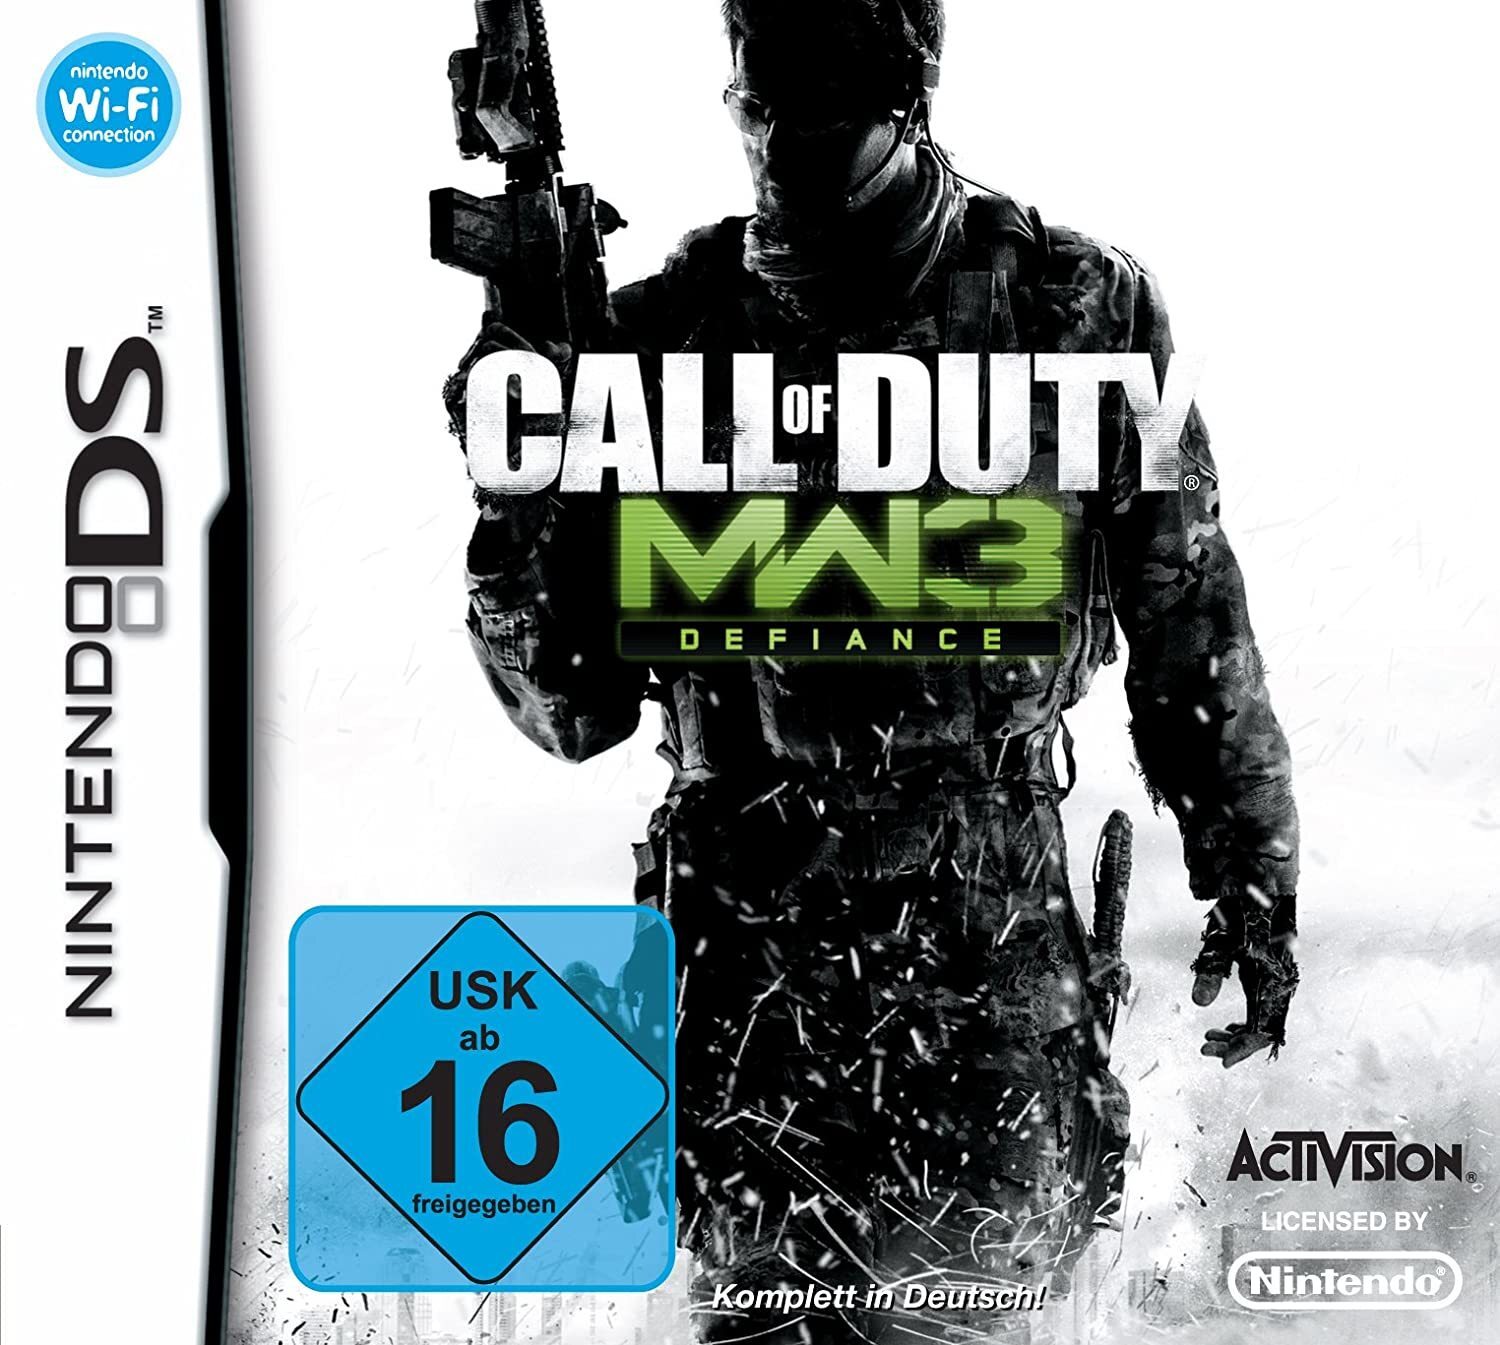 Call of duty modern warfare nintendo ds. Call of Duty Black ops Nintendo DS. Call of Duty: Modern Warfare 3: Defiance. NDS Call of Duty.